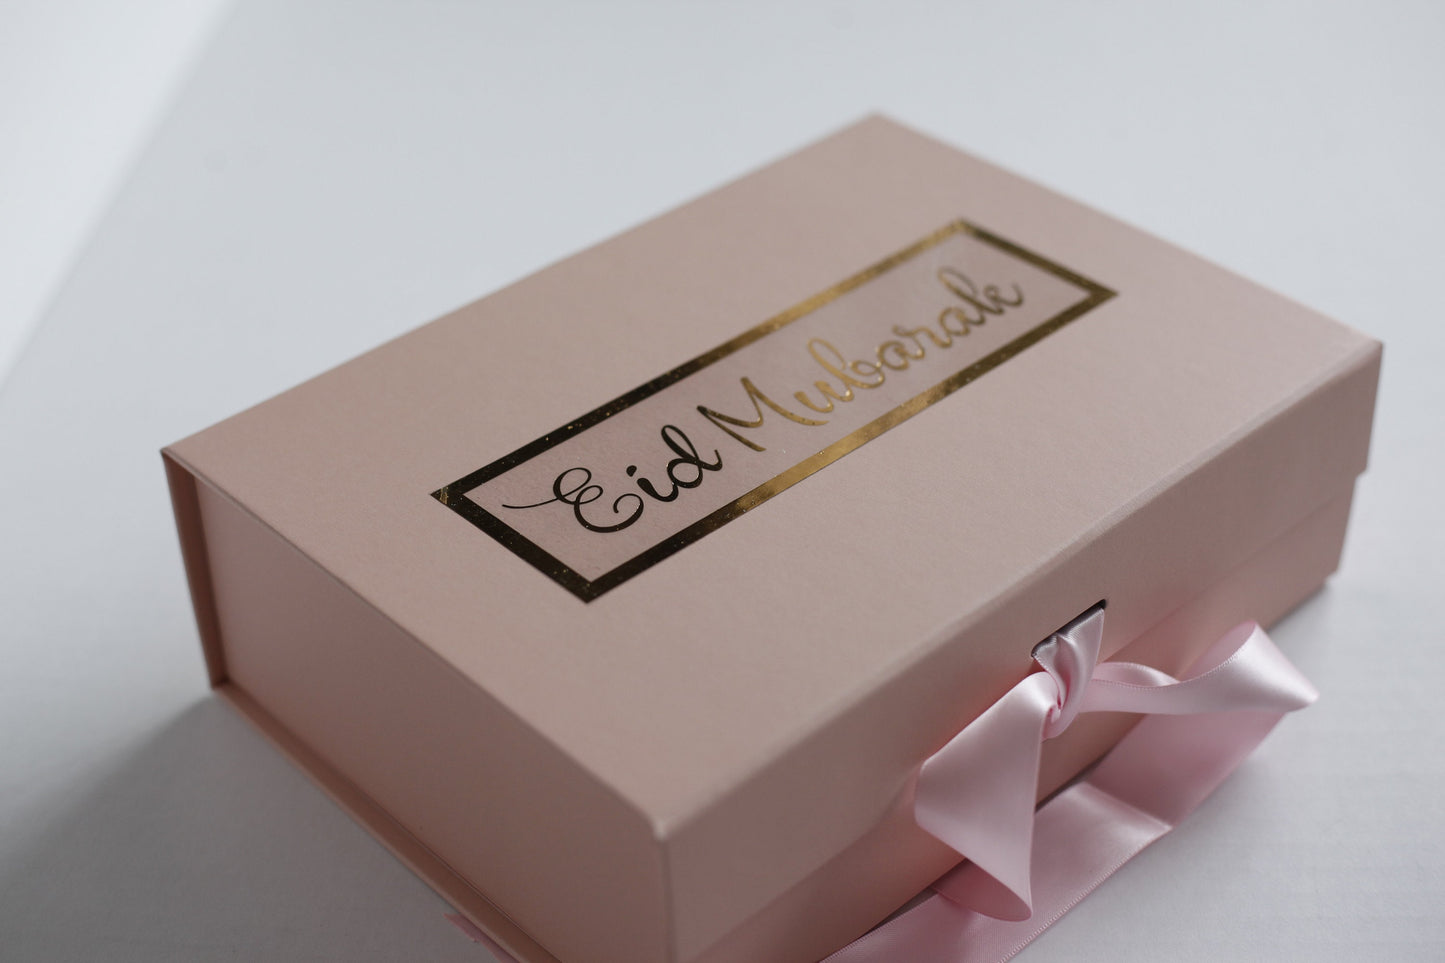 Shades of Brown, Luxury Chiffon Hijab Eid gifts box, a beautiful hijab box, Hijab magnet, Beautiful Gold foil label box with magnet closing